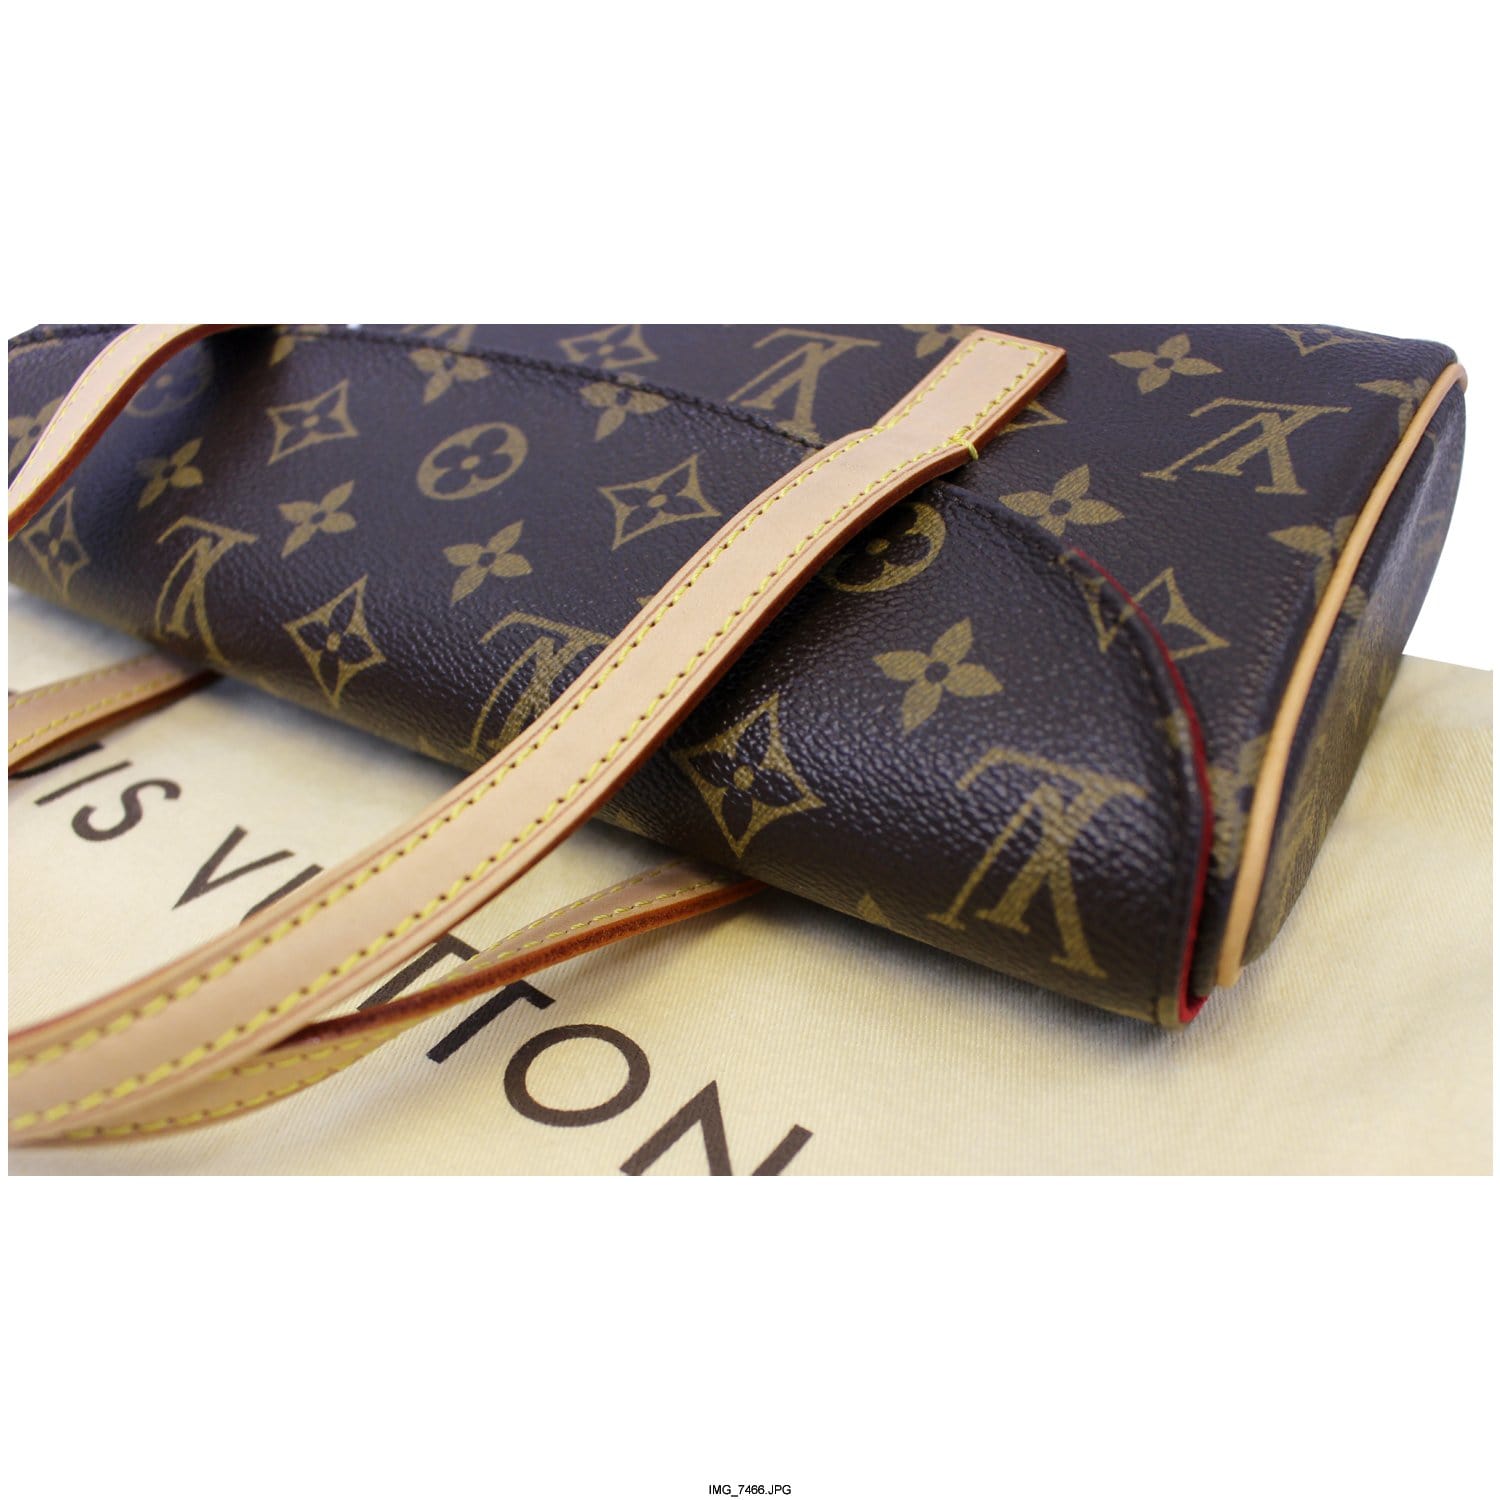 Louis Vuitton Sonatine Handbag - Farfetch